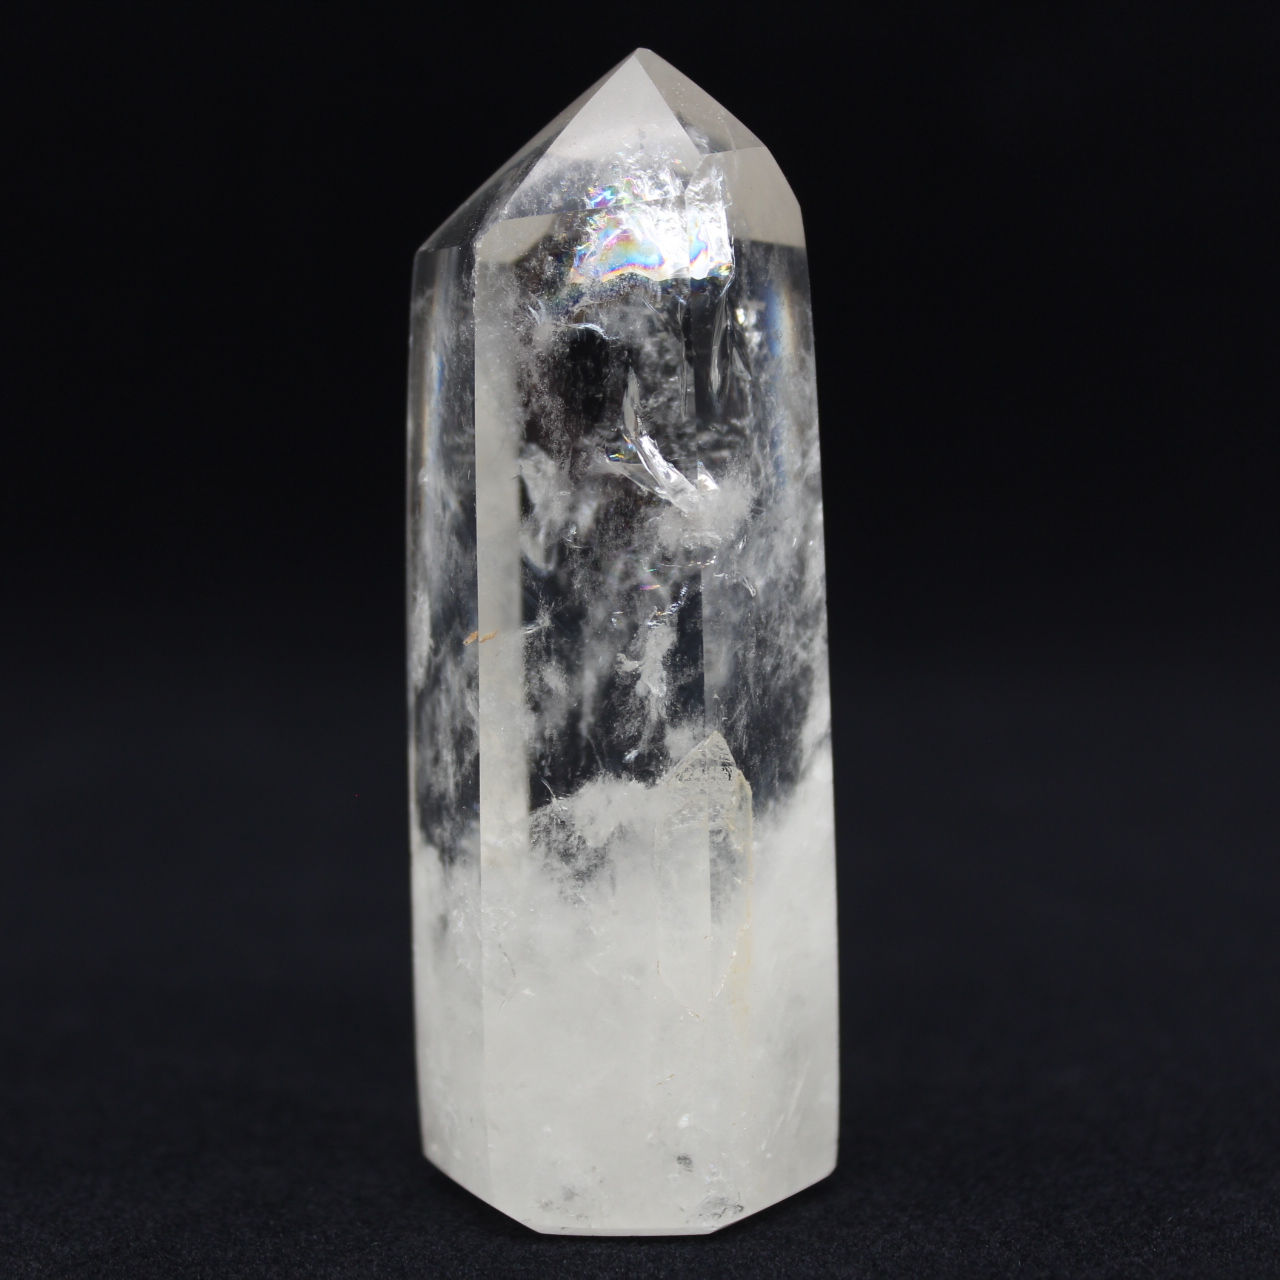 Prisma de cristal de rocha polido